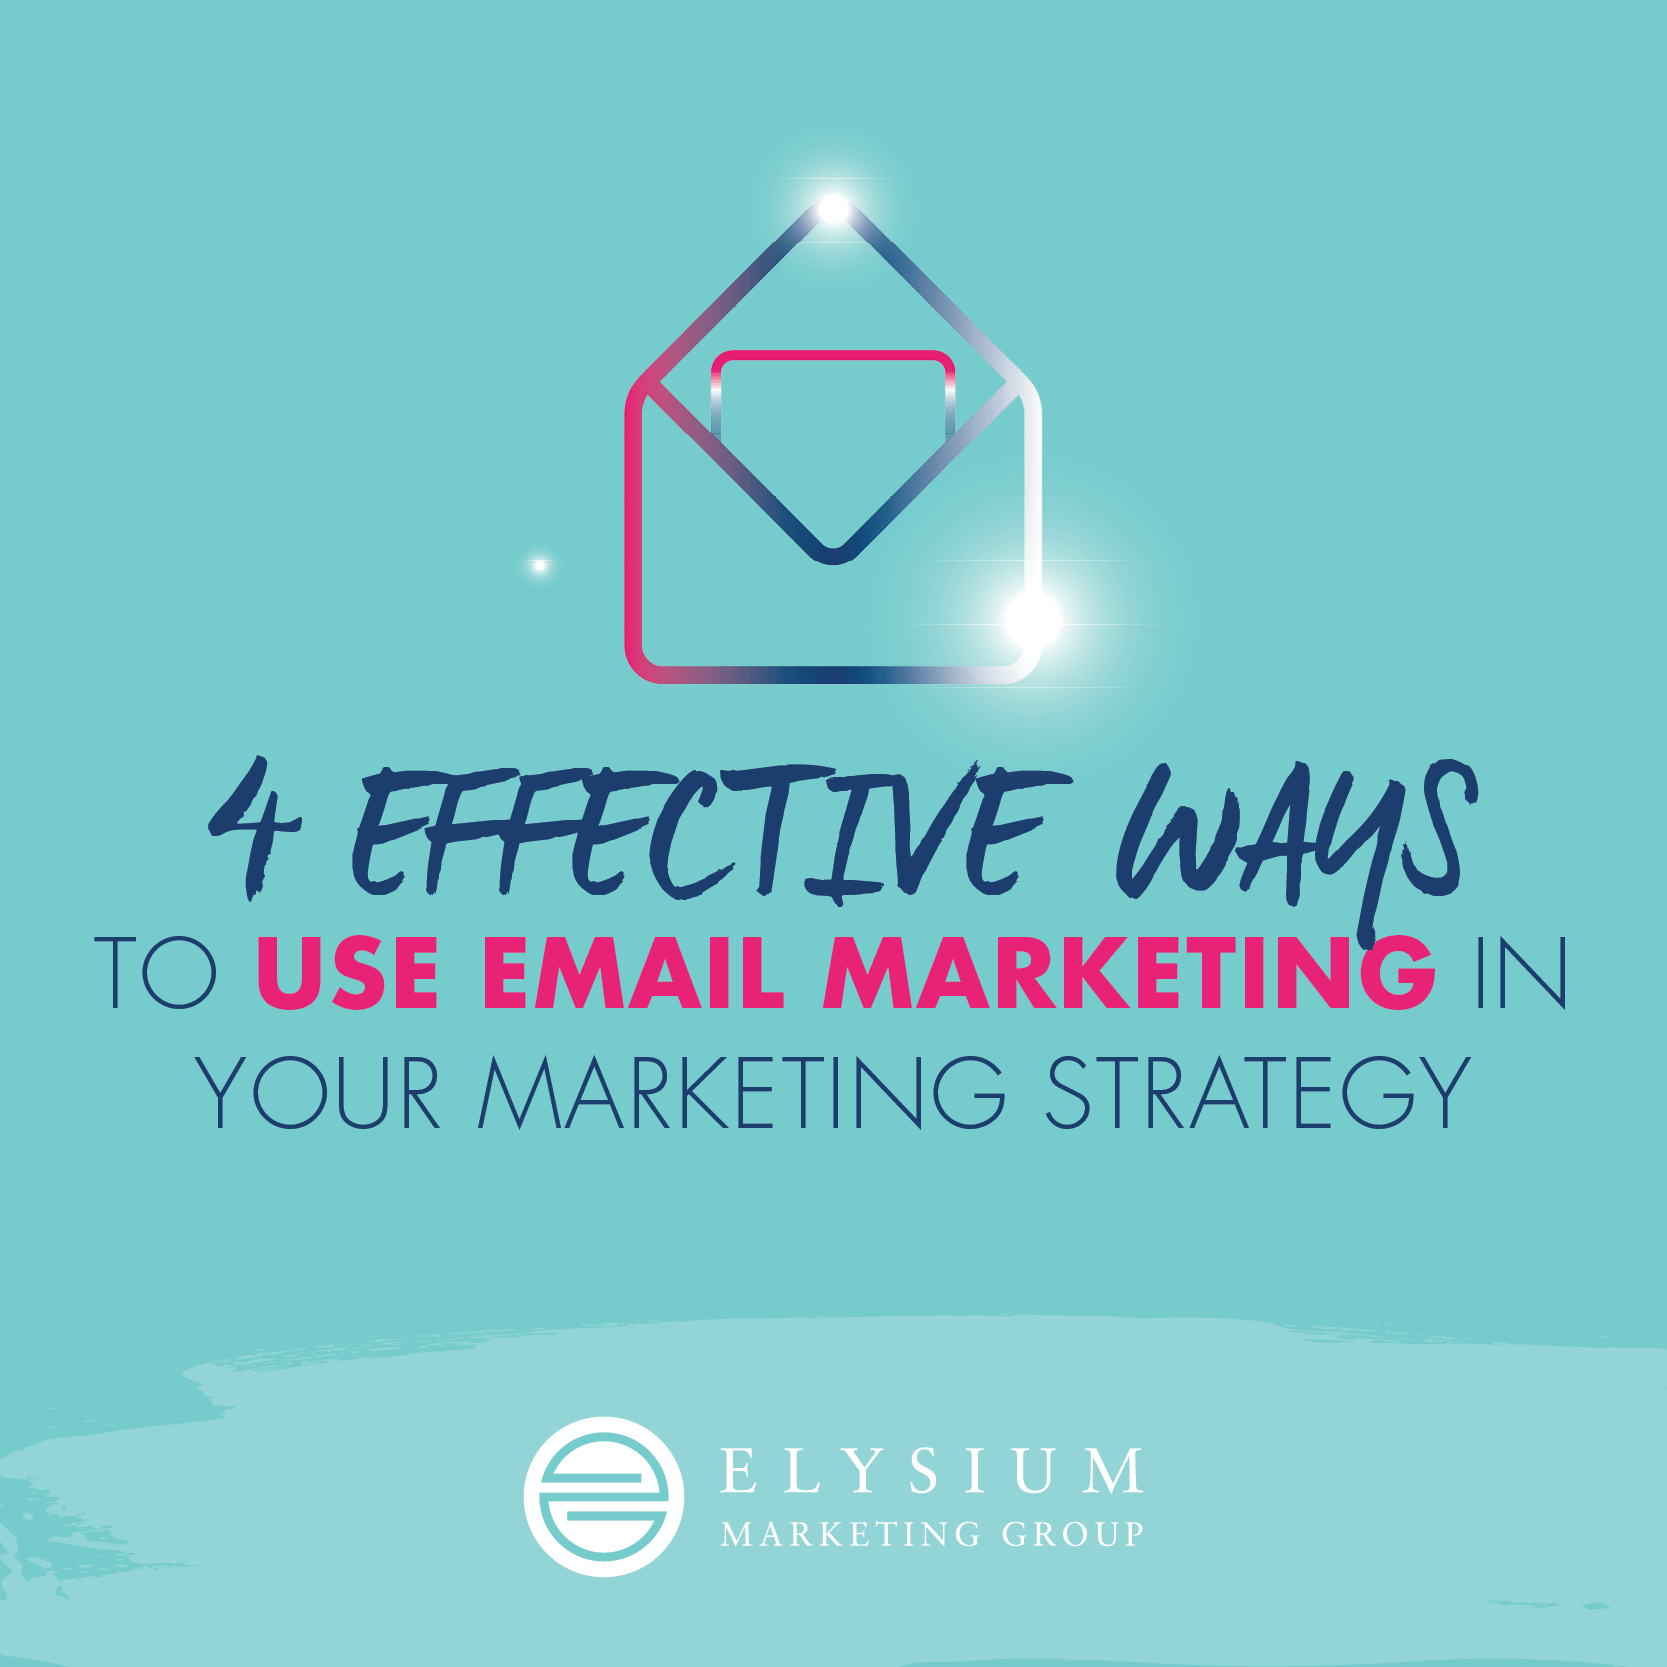 4 Effective ways to use email marketing by Elysium Marketing Group